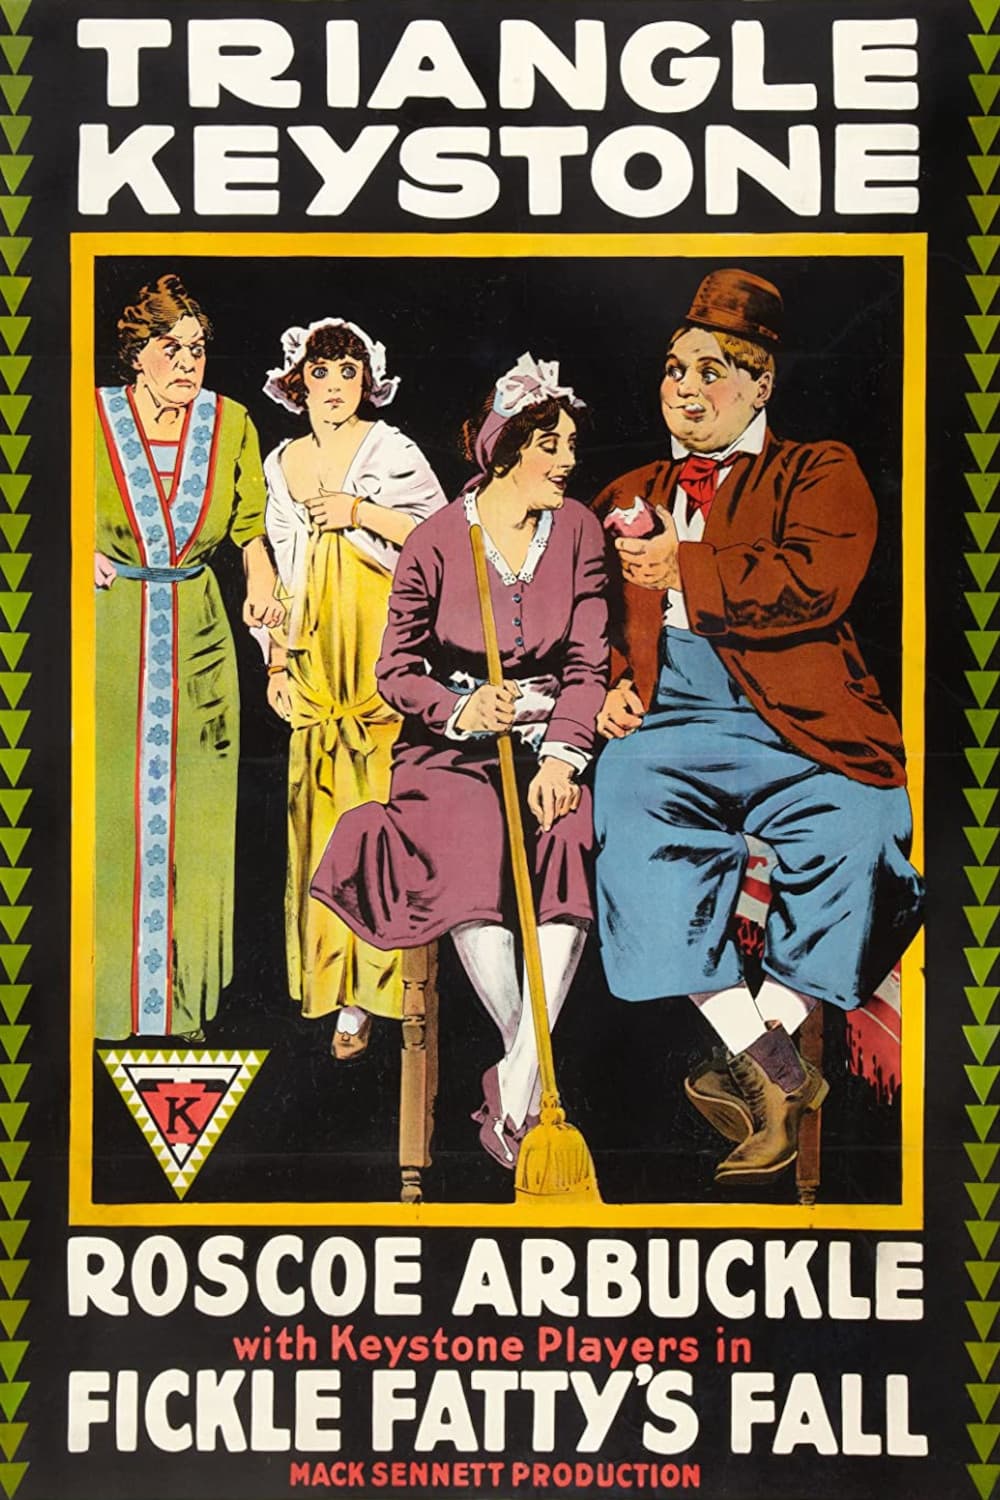 Fickle Fatty's Fall (1915)